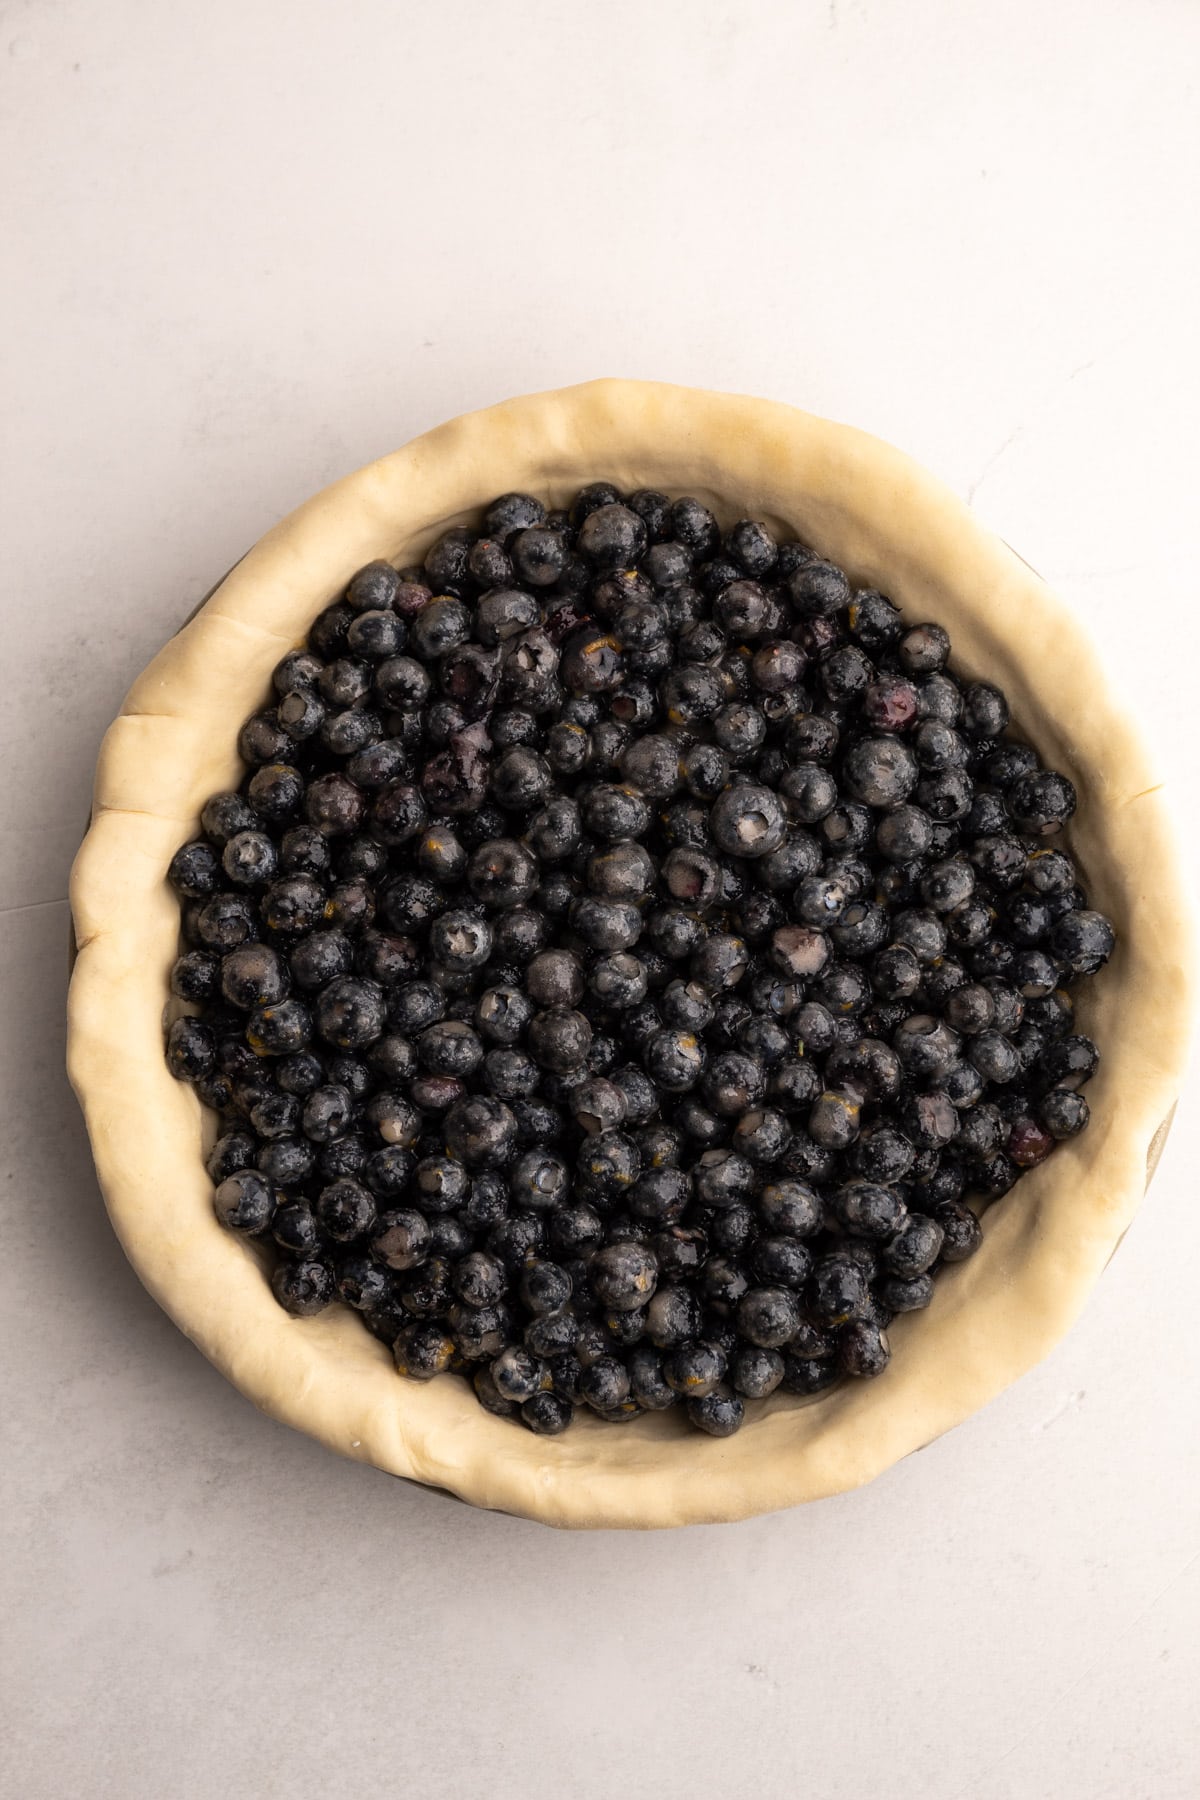 Blueberry pie filling in an unbaked pie crust.